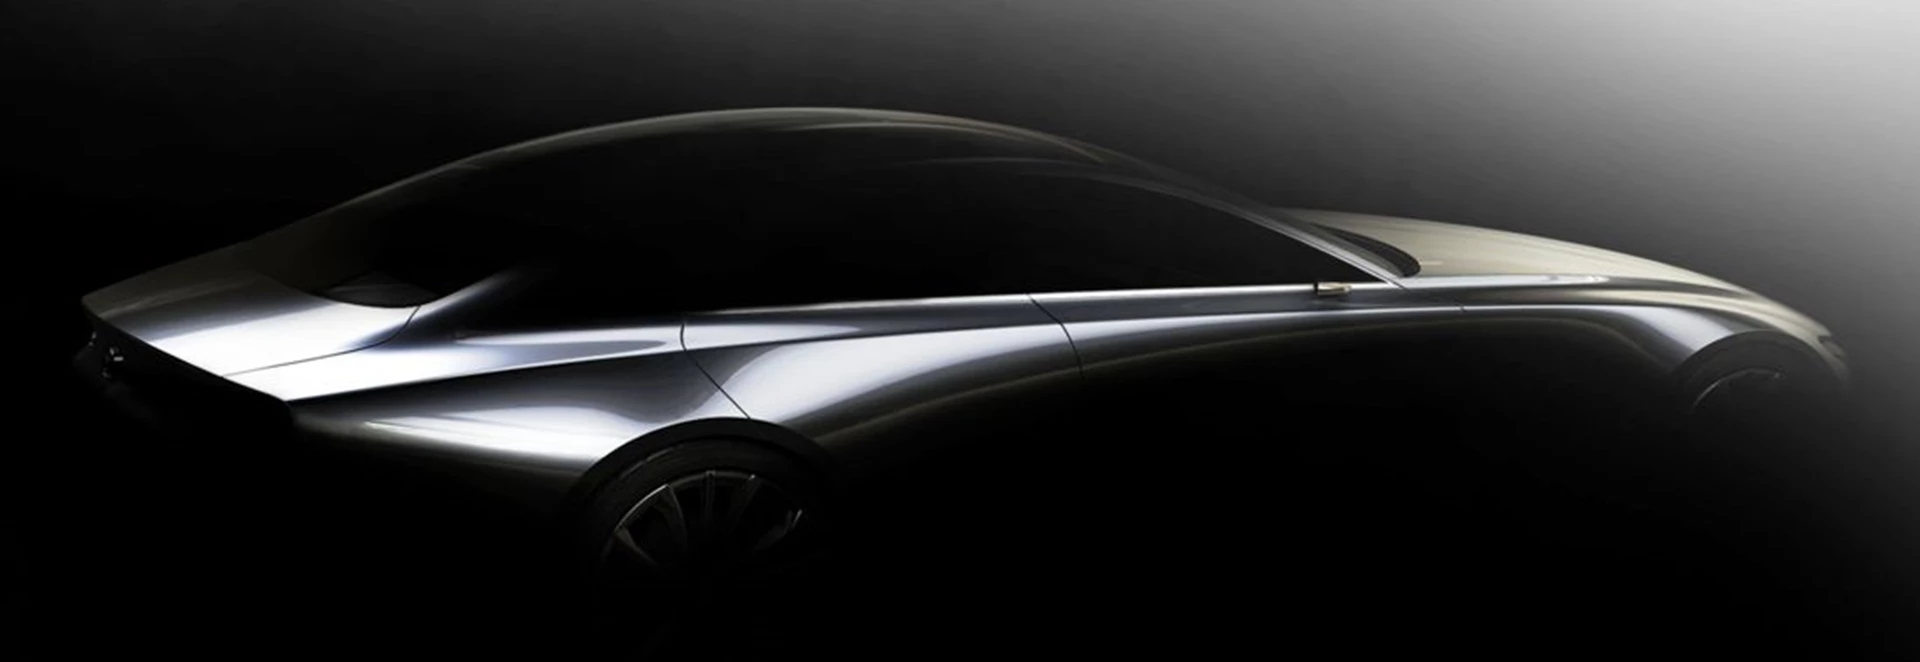 Mazda teaser image hints at all-new sports car